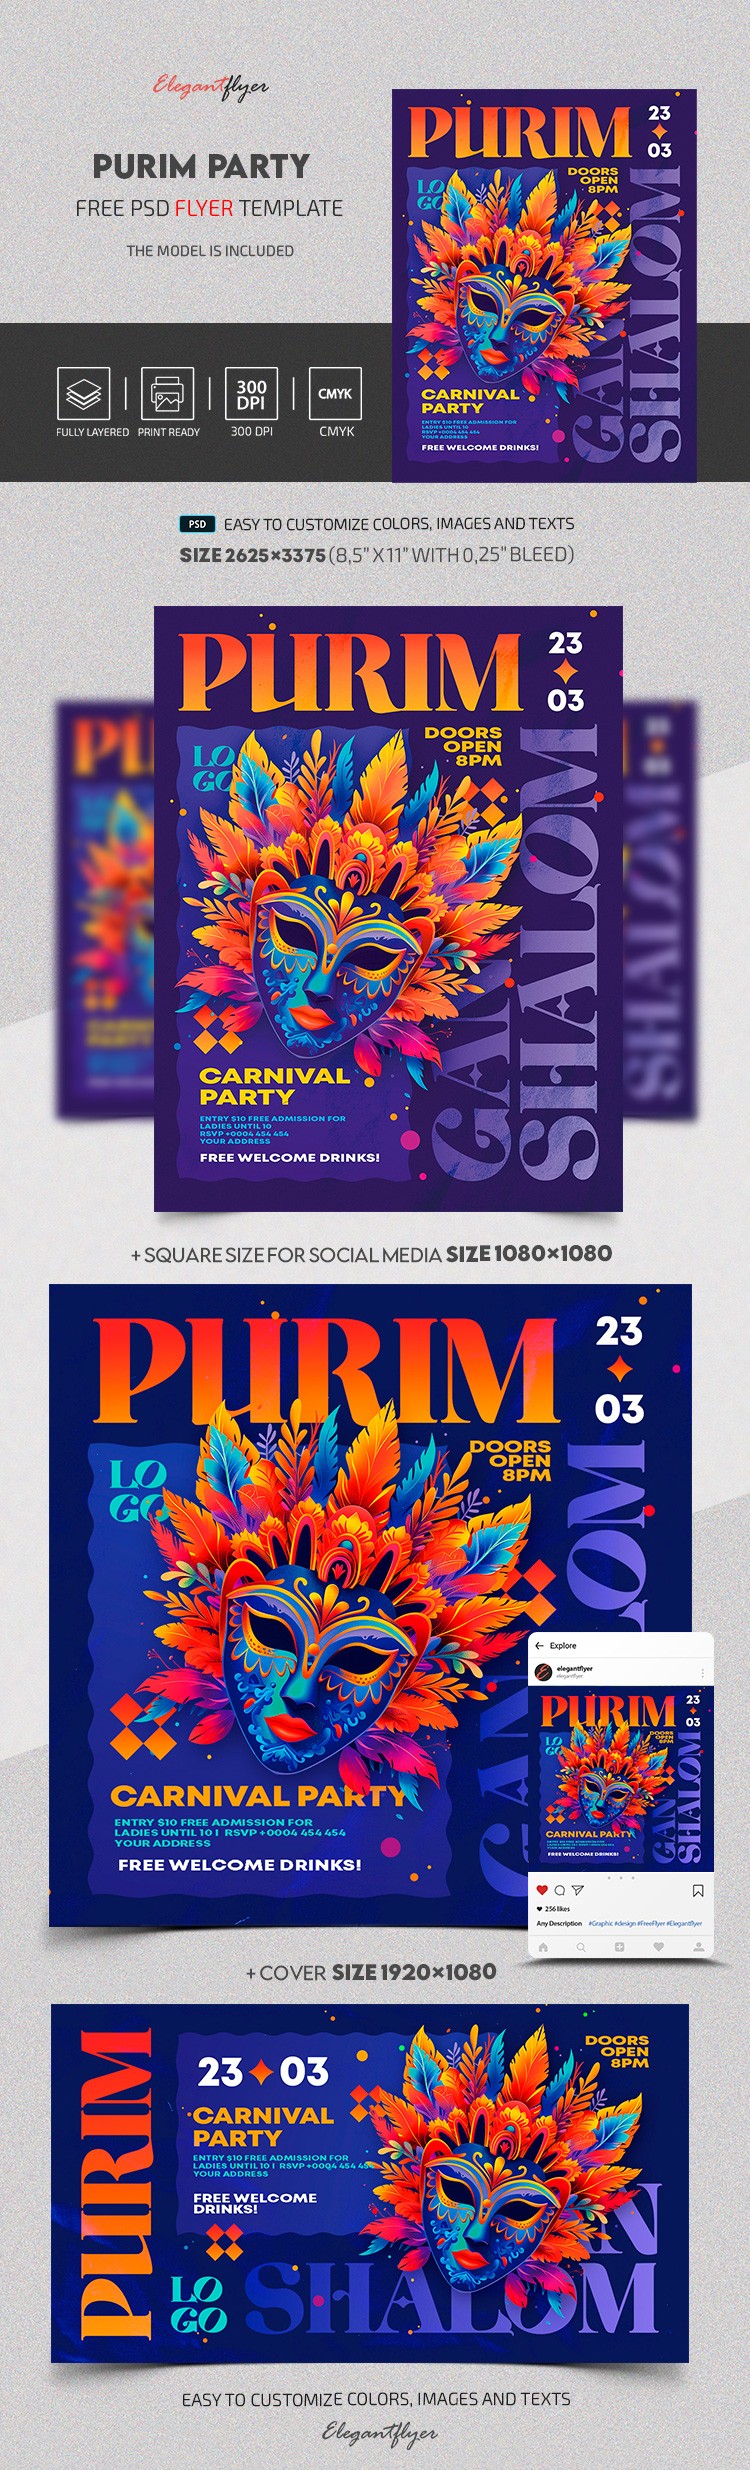 Festa de Purim by ElegantFlyer